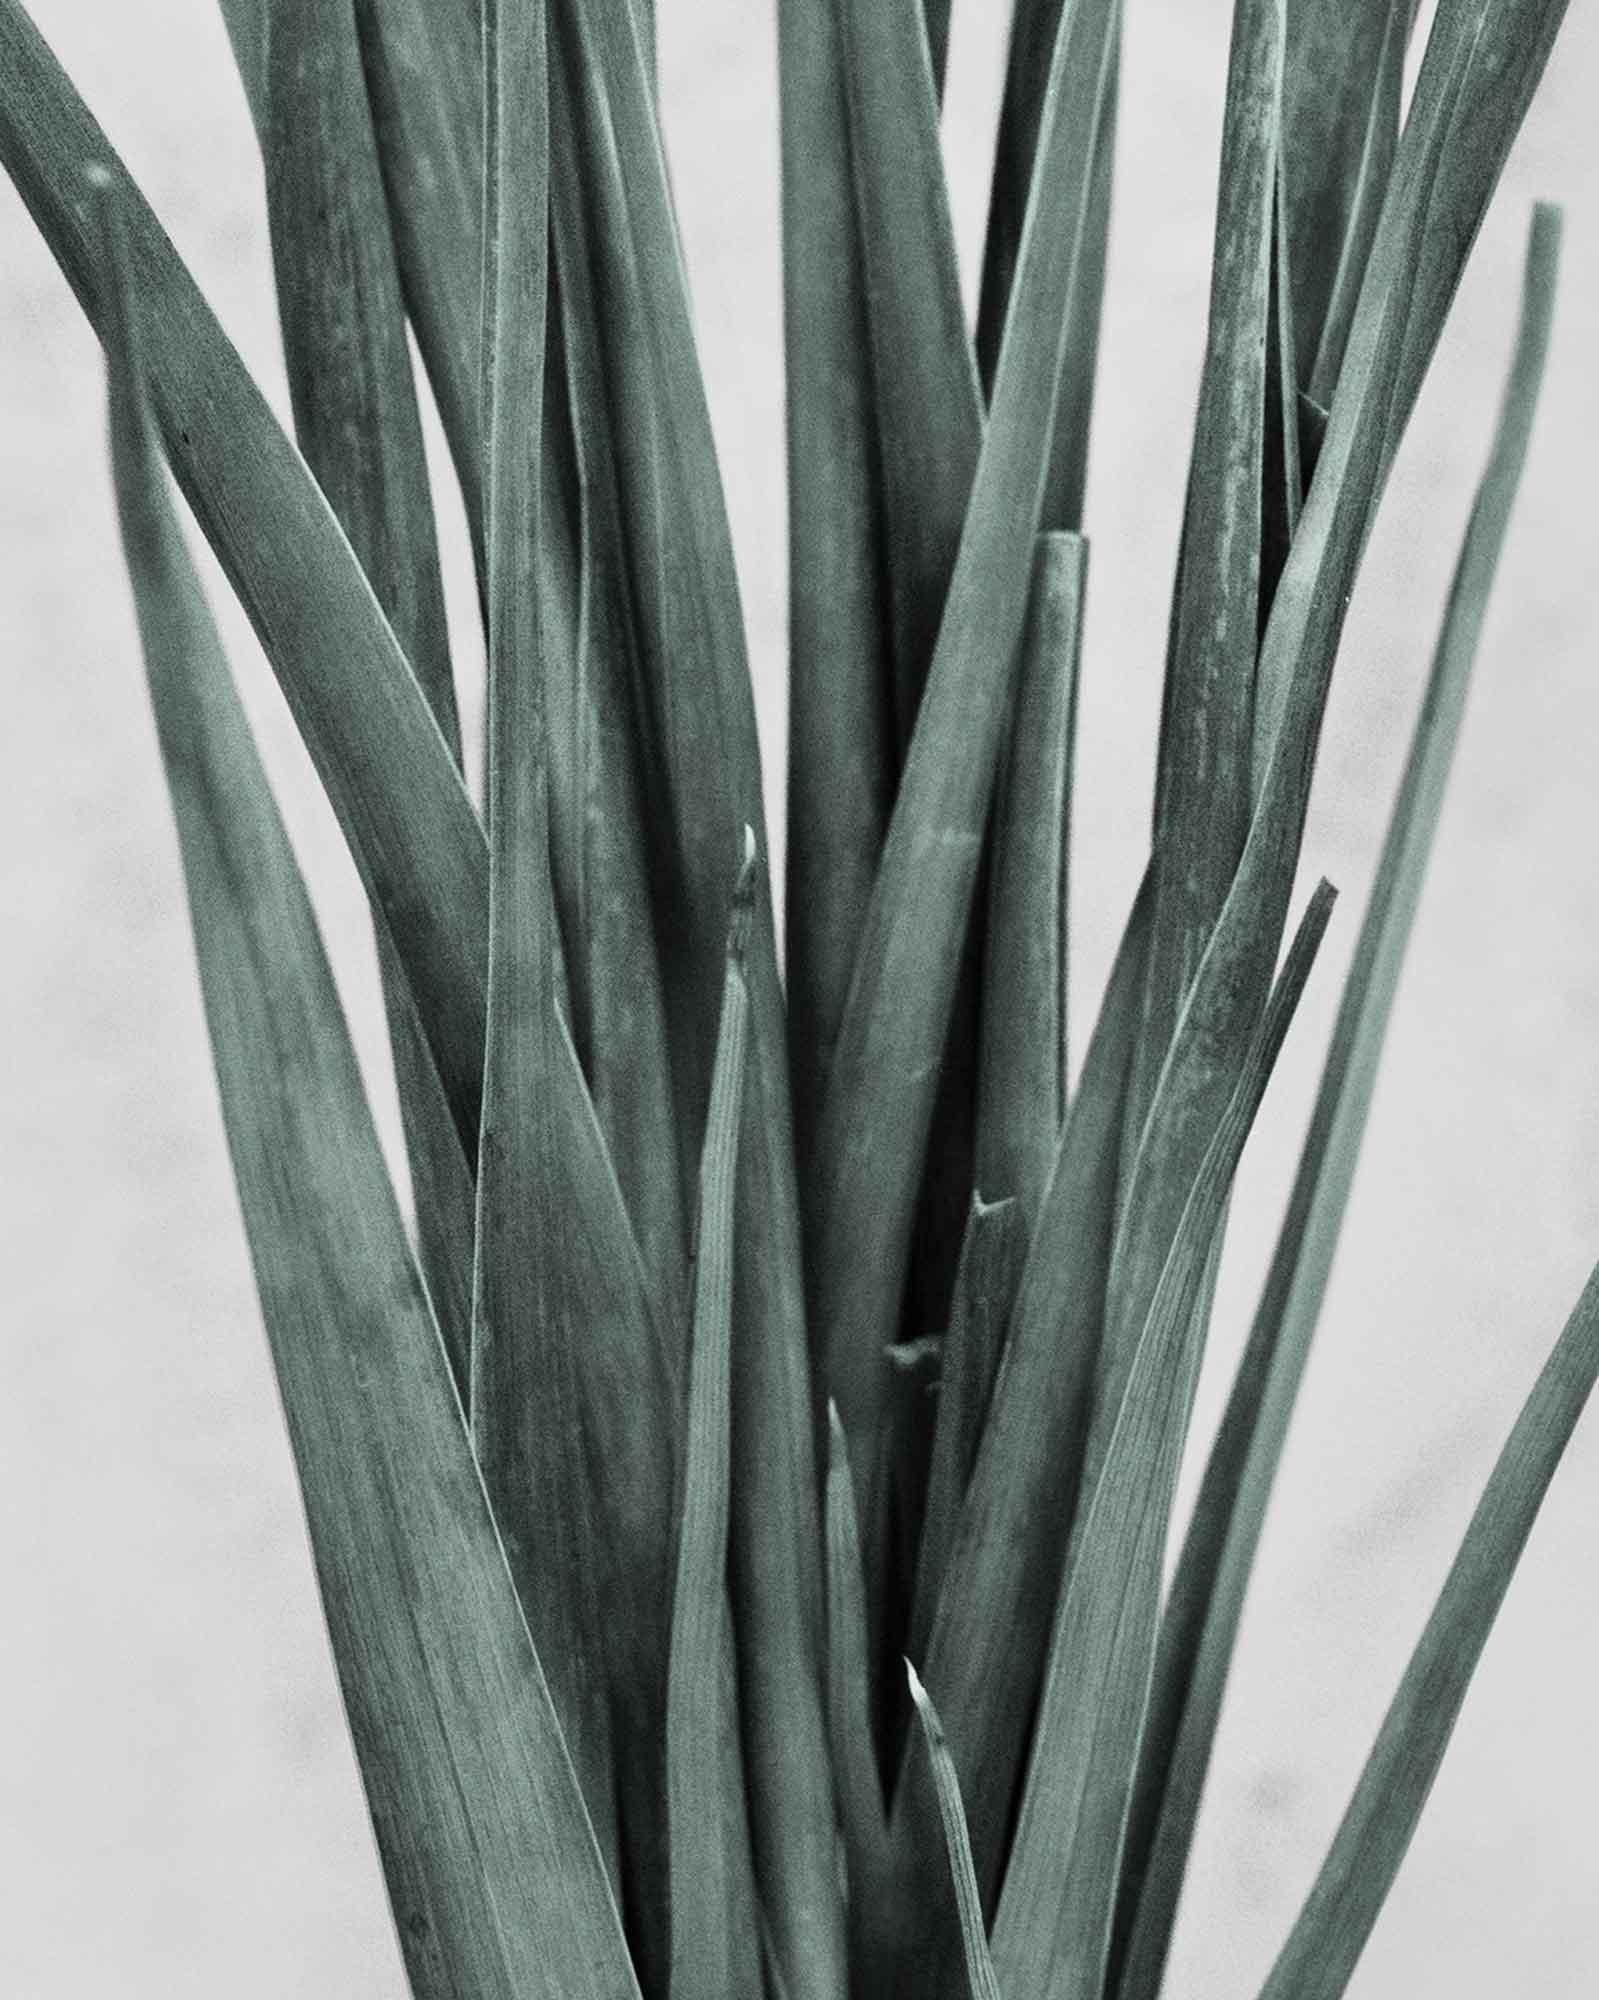 Botanica #21 (Iris Germanica) - Gray Still-Life Photograph by Vee Speers